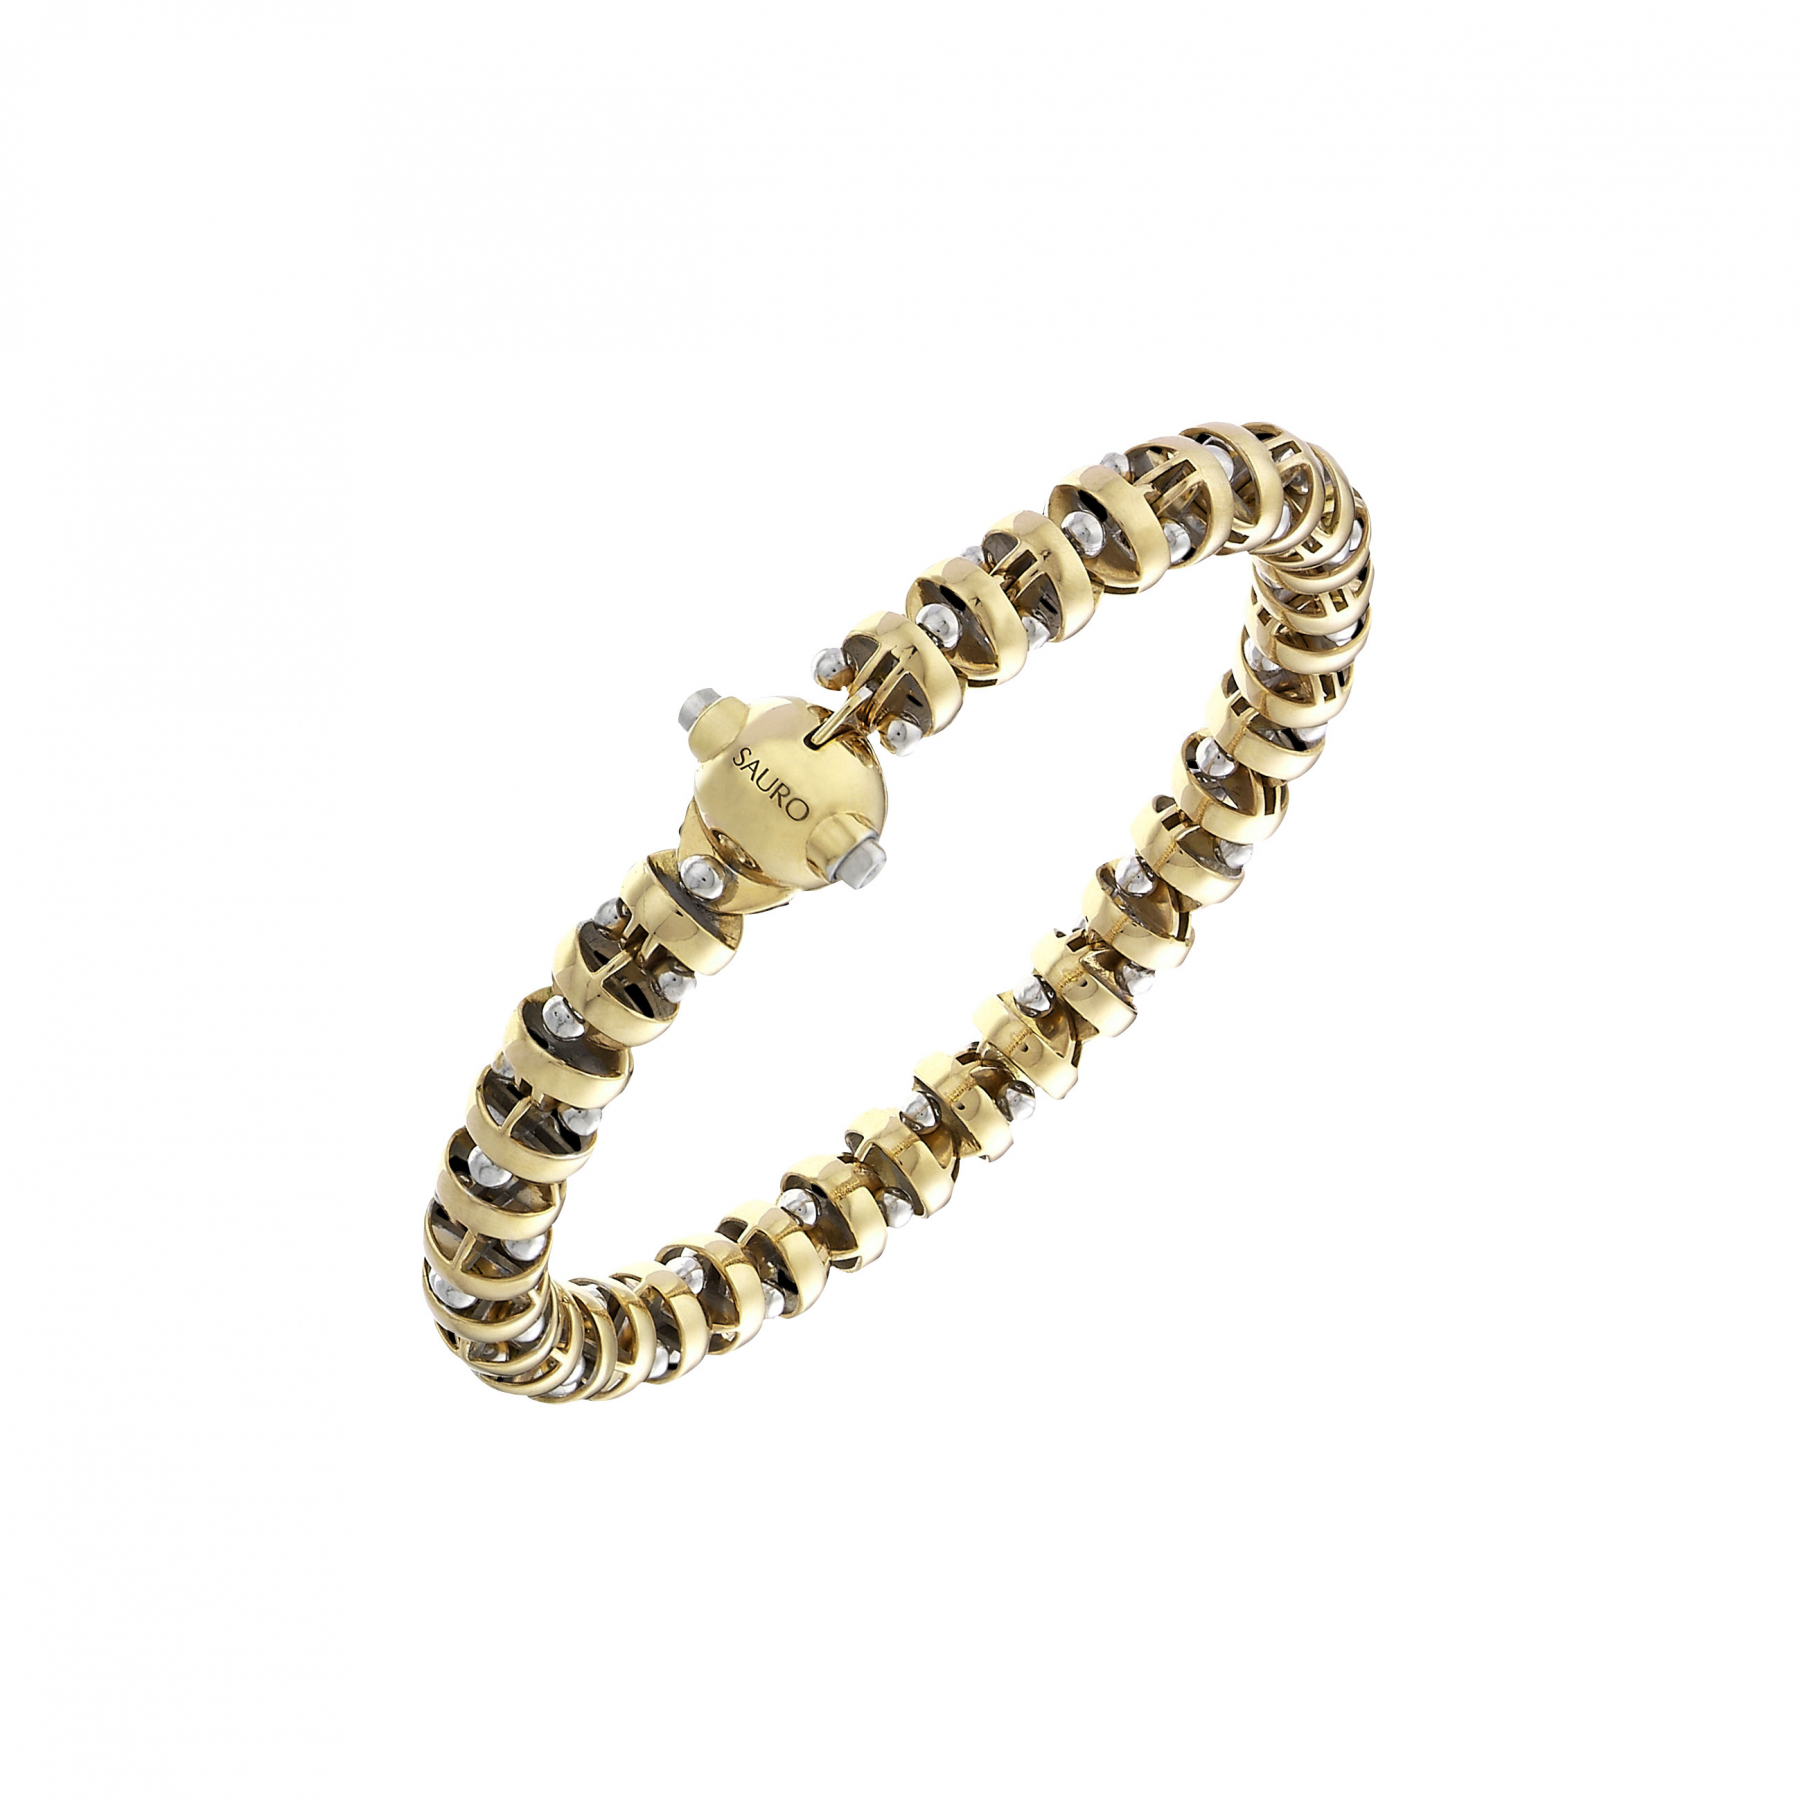 Buy Stylish Gold Bracelet for Men at Best Price | Tanishq UAE